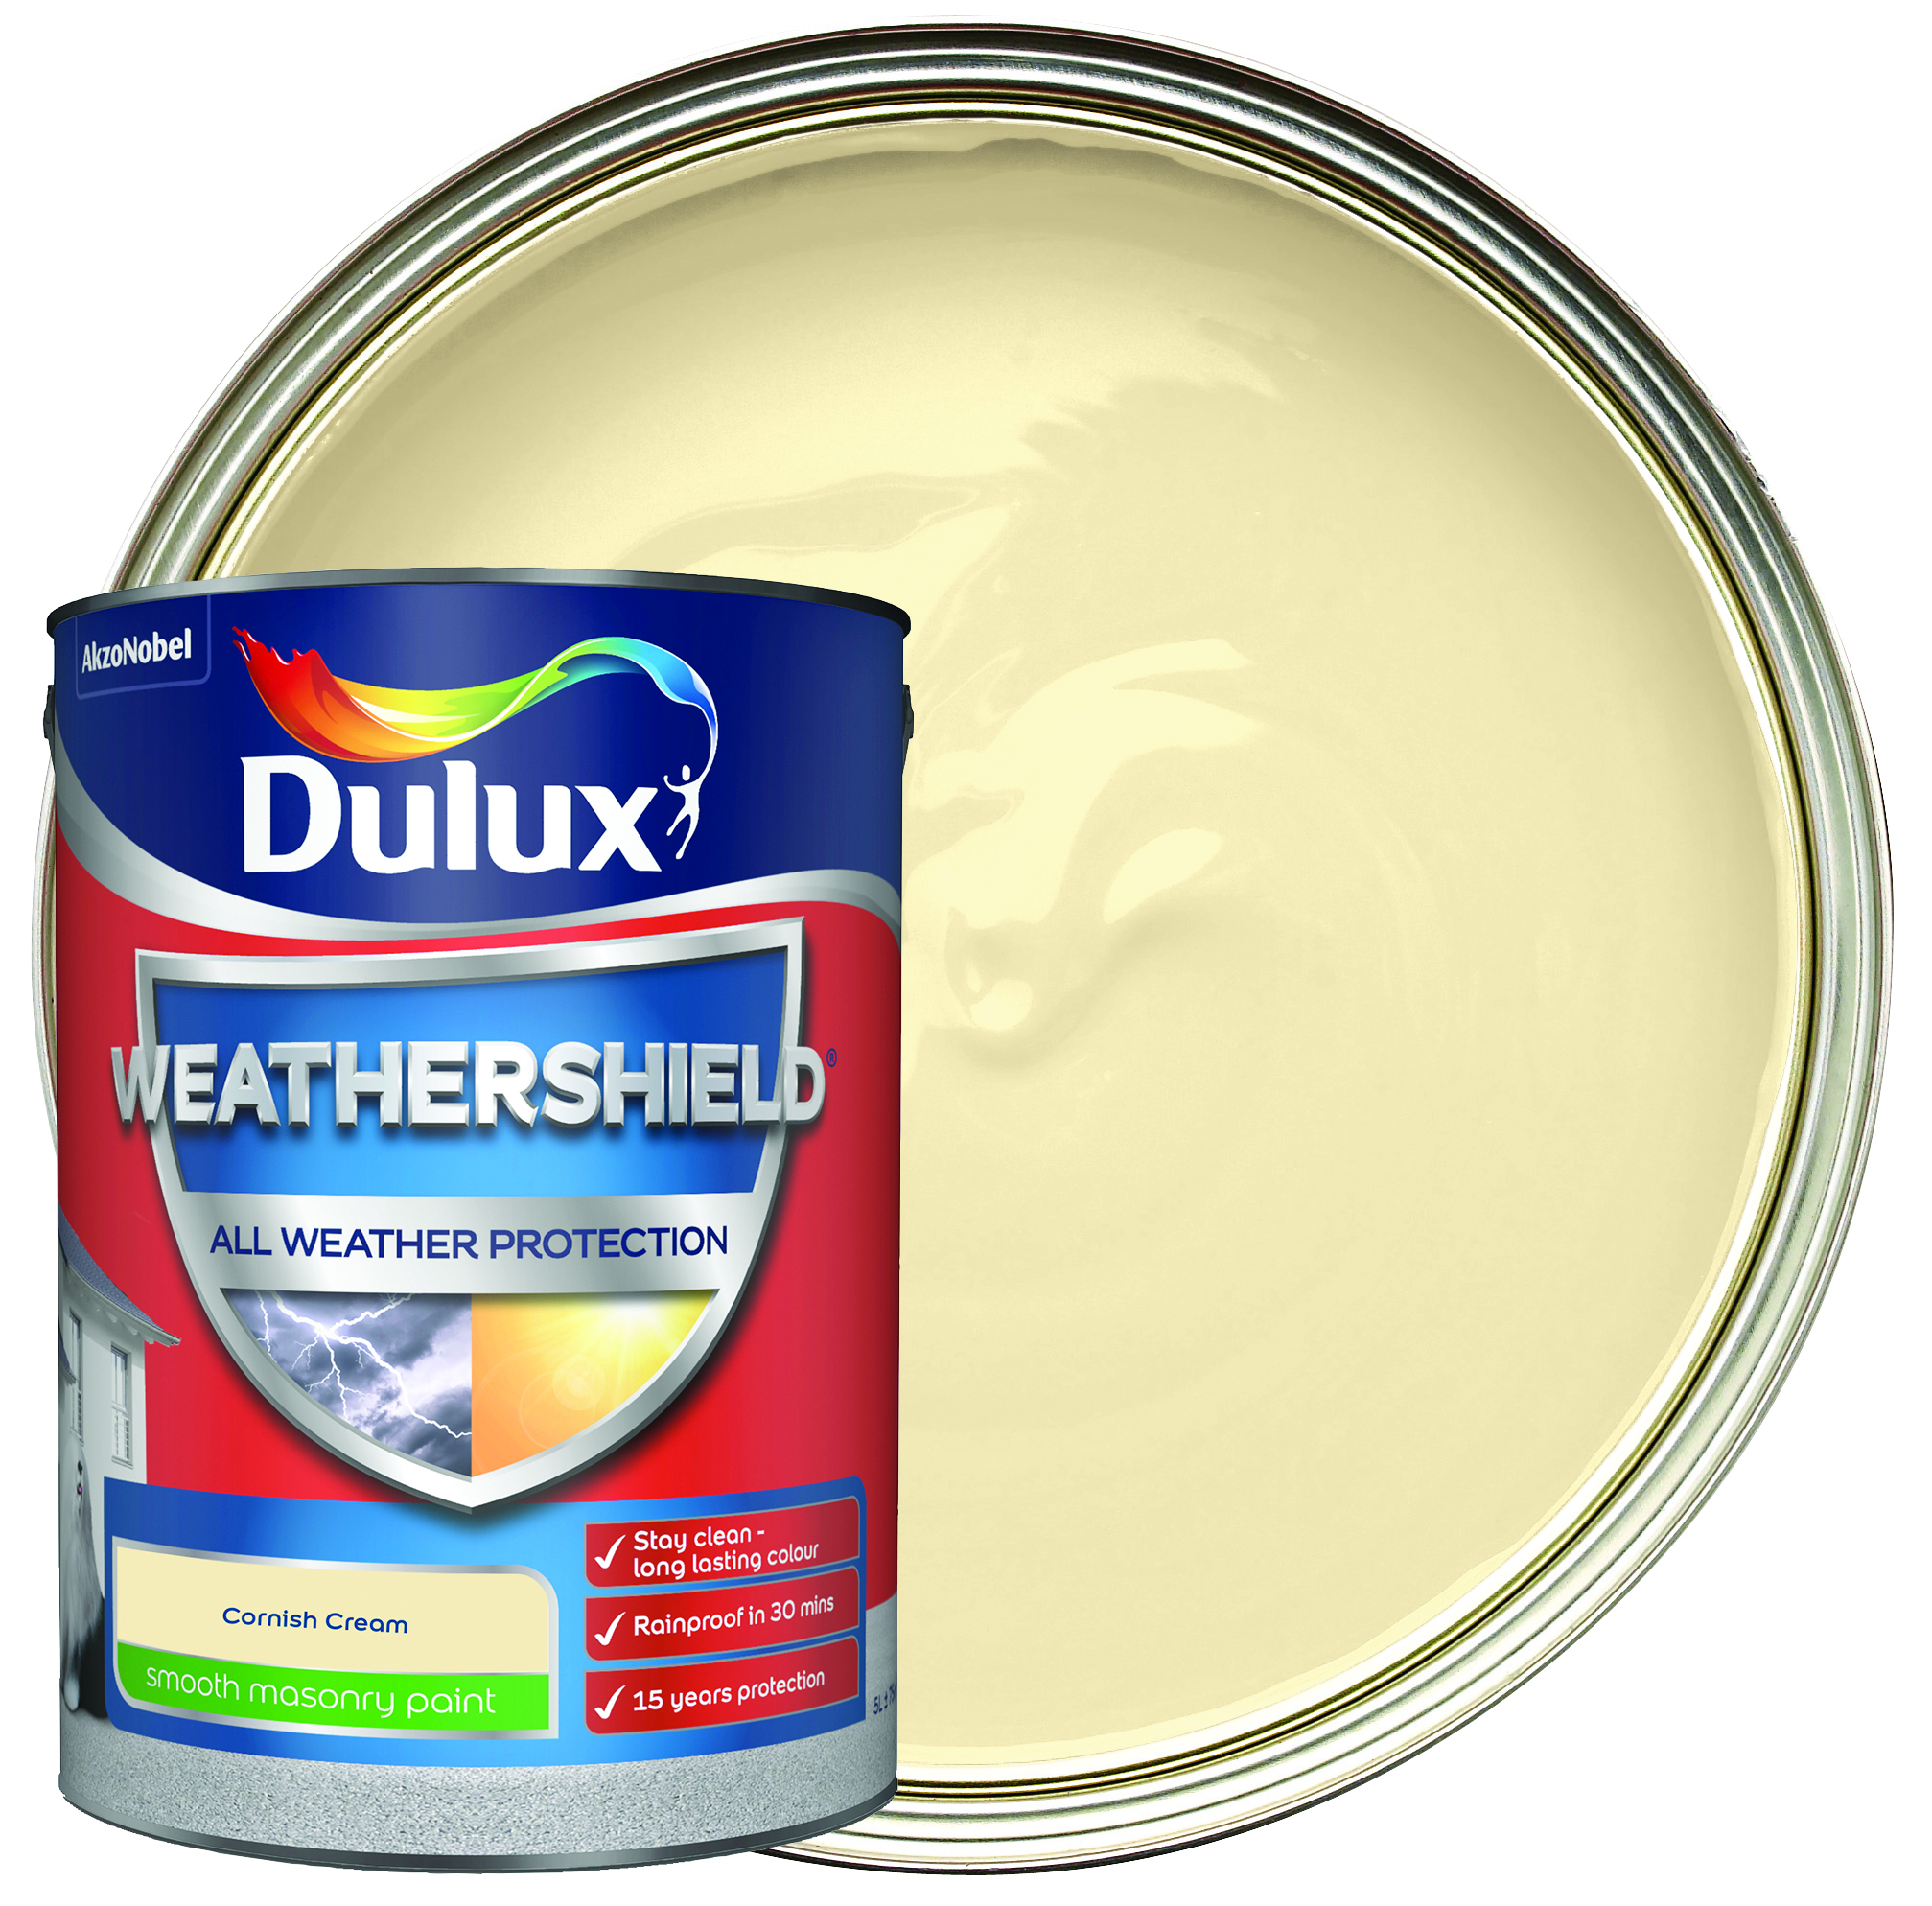 Dulux Weathershield All Weather Purpose Smooth Paint - Cornish Cream - 5L